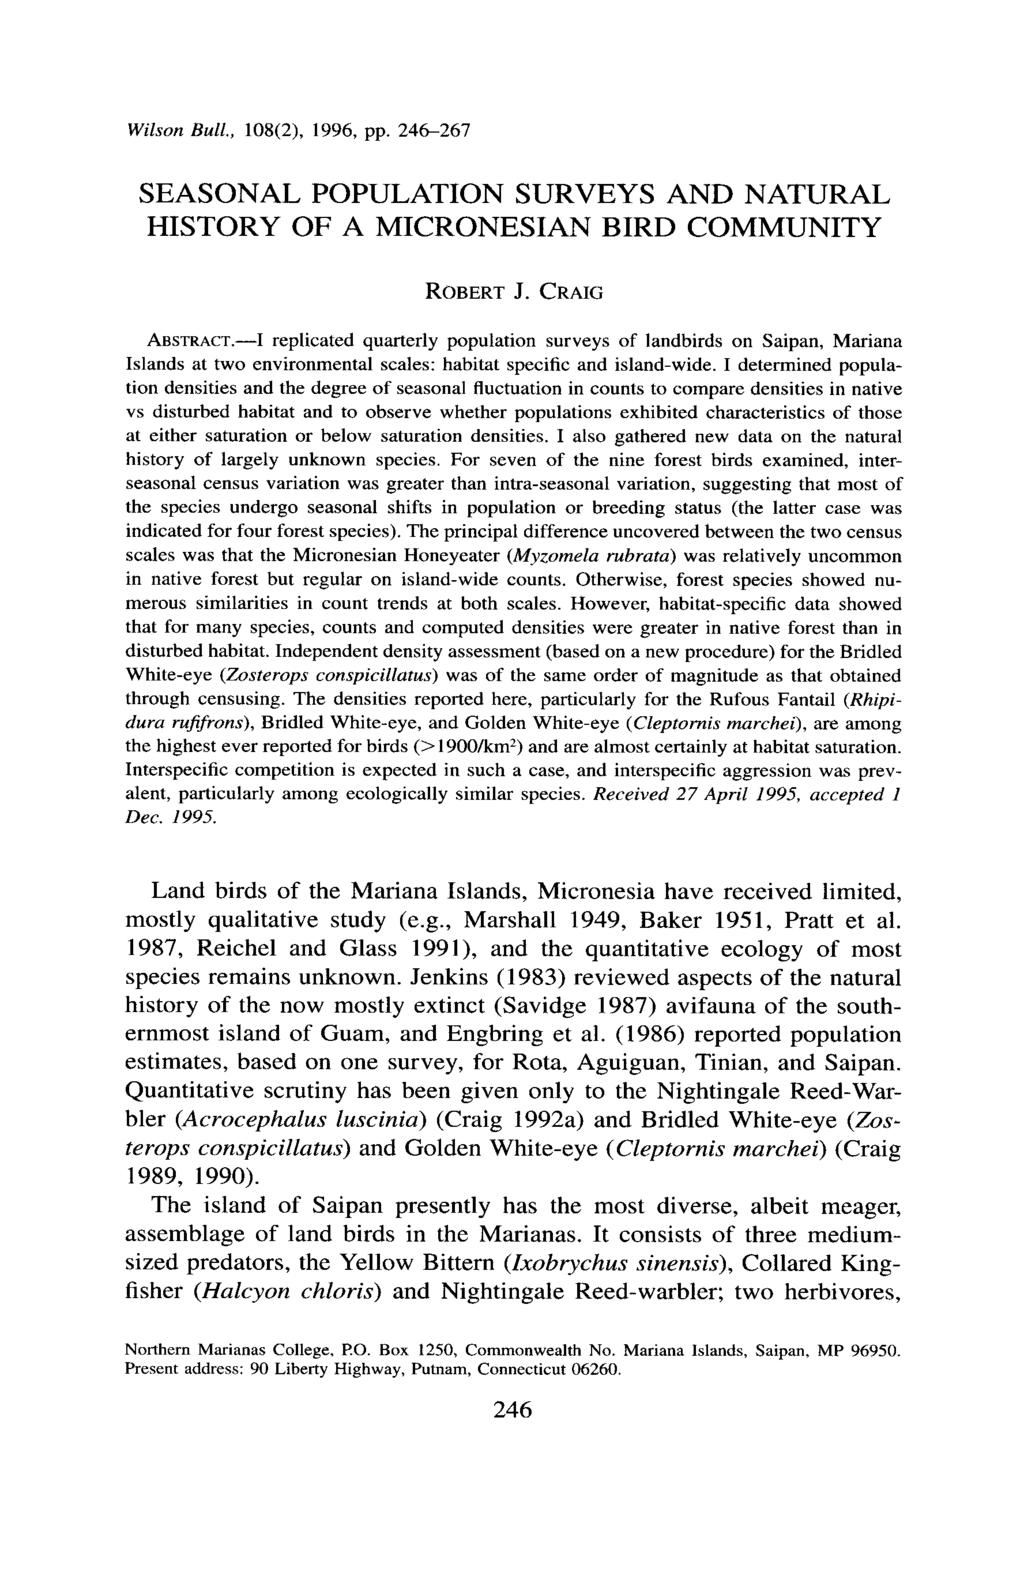 Wilson Bull., 108(2), 1996, pp. 246267 SEASONAL POPULATION SURVEYS AND NATURAL HISTORY OF A MICRONESIAN BIRD COMMUNITY ROBERT J. CRAIG ABSTRACT.